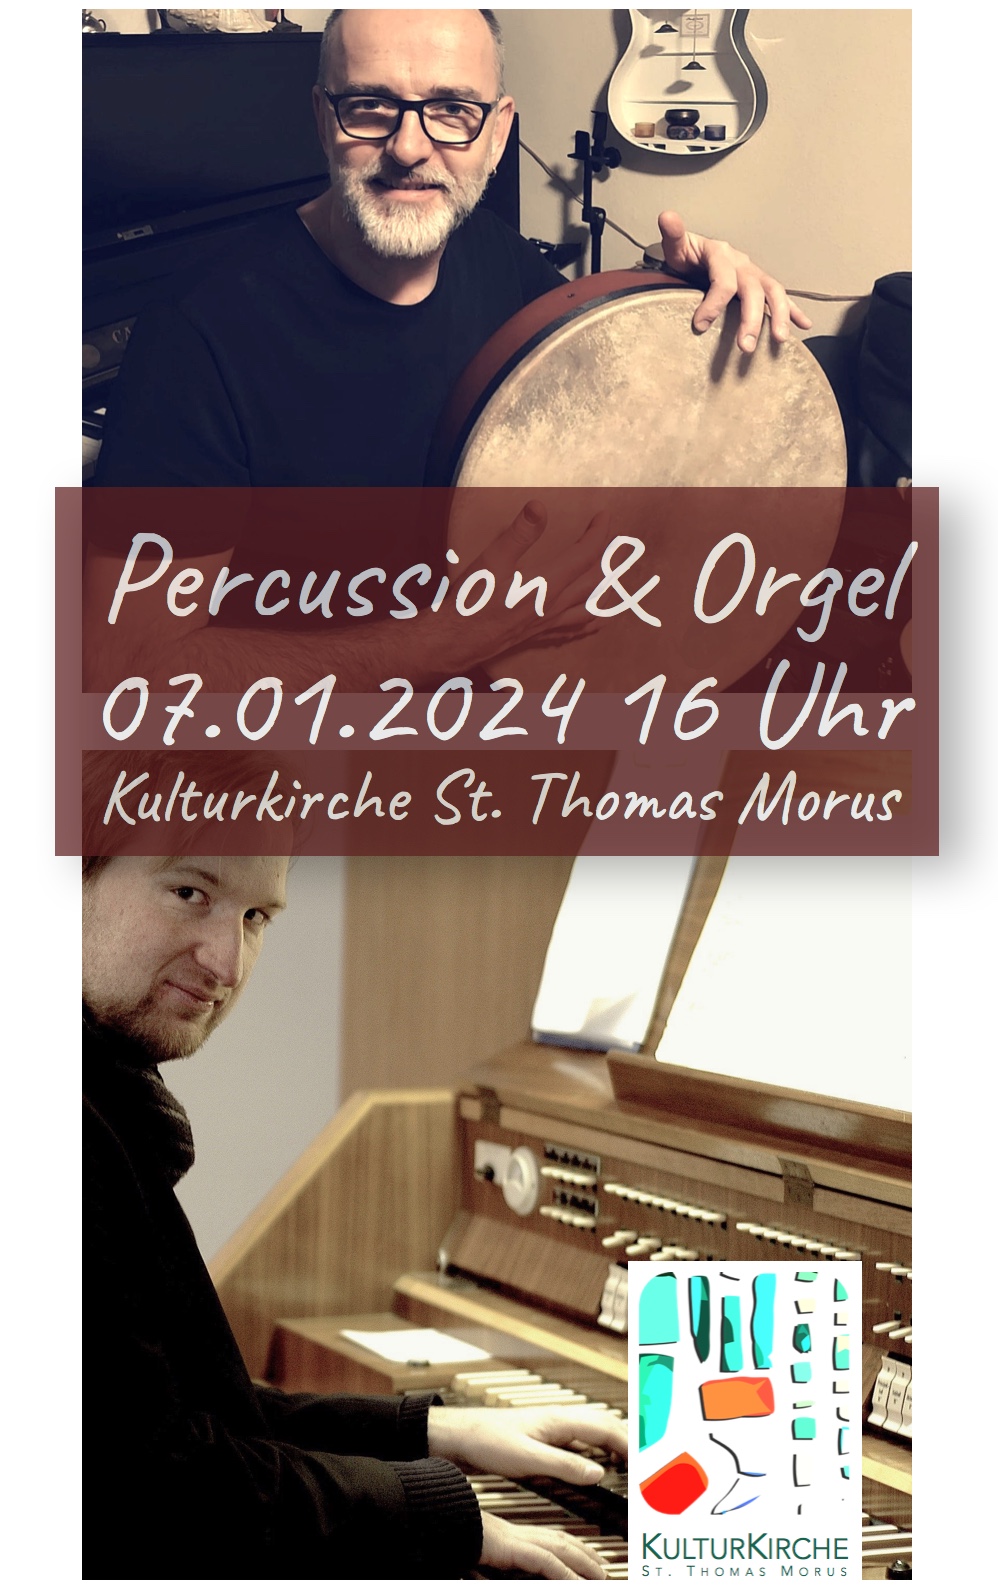 Percussion und Orgel am 7. Januar 2024 mit Stephan Pussel und Jakob Handrack (c) Förderverein St. Thomas Morus e.V.